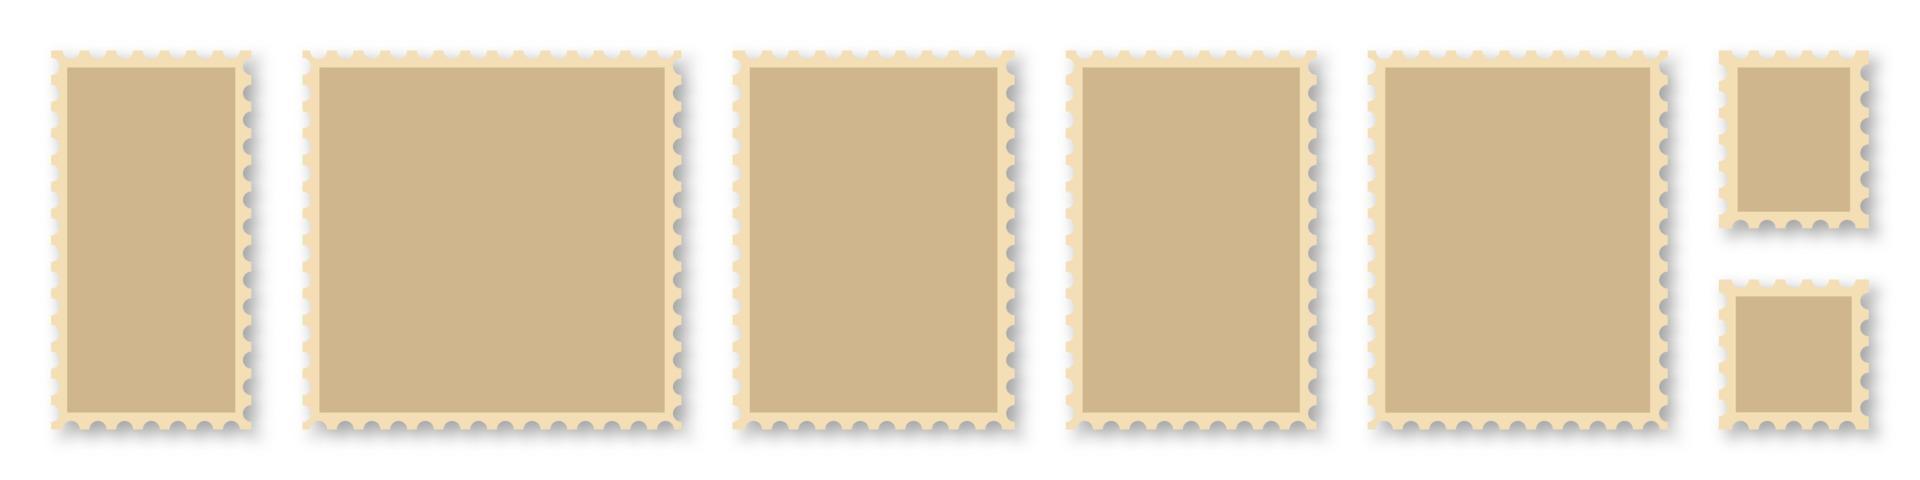 blanco port postzegels kaders set. mockup port postzegels met schaduw. port postzegel borders sjabloon verzameling. realistisch post postzegels set. vector illustratie